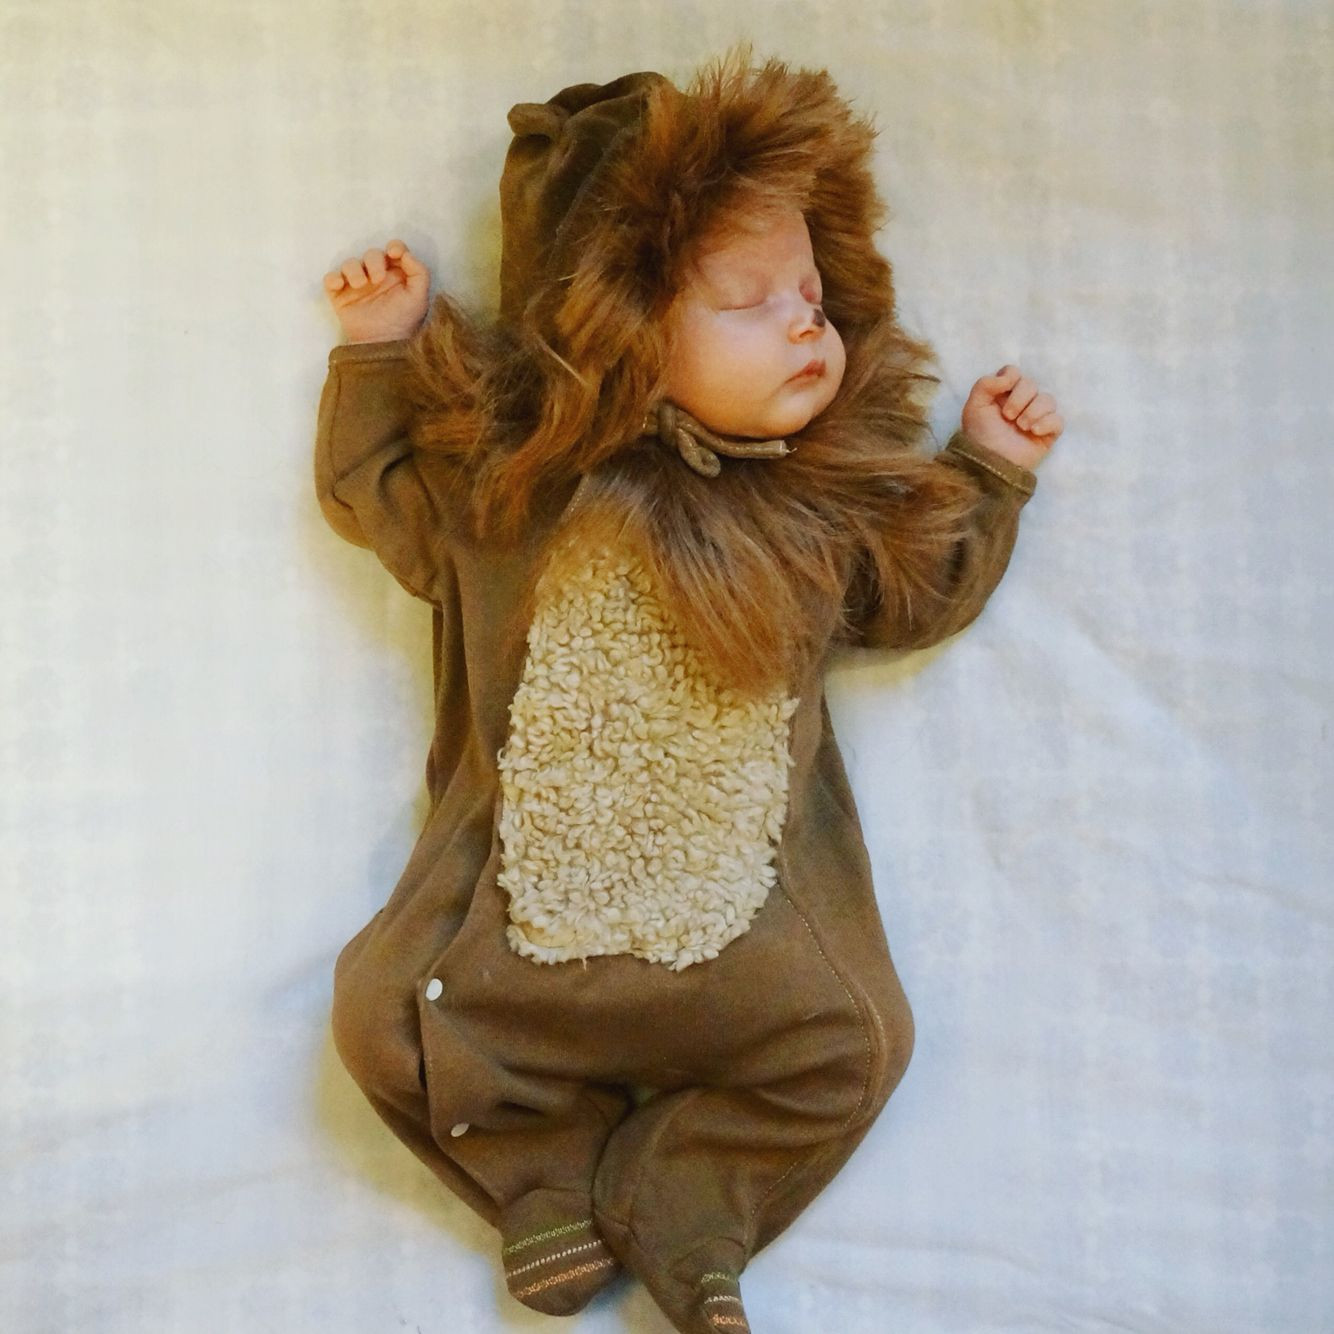 DIY Lion Costume Wizard Of Oz
 DIY Newborn baby Halloween costume Wizard of Oz lion